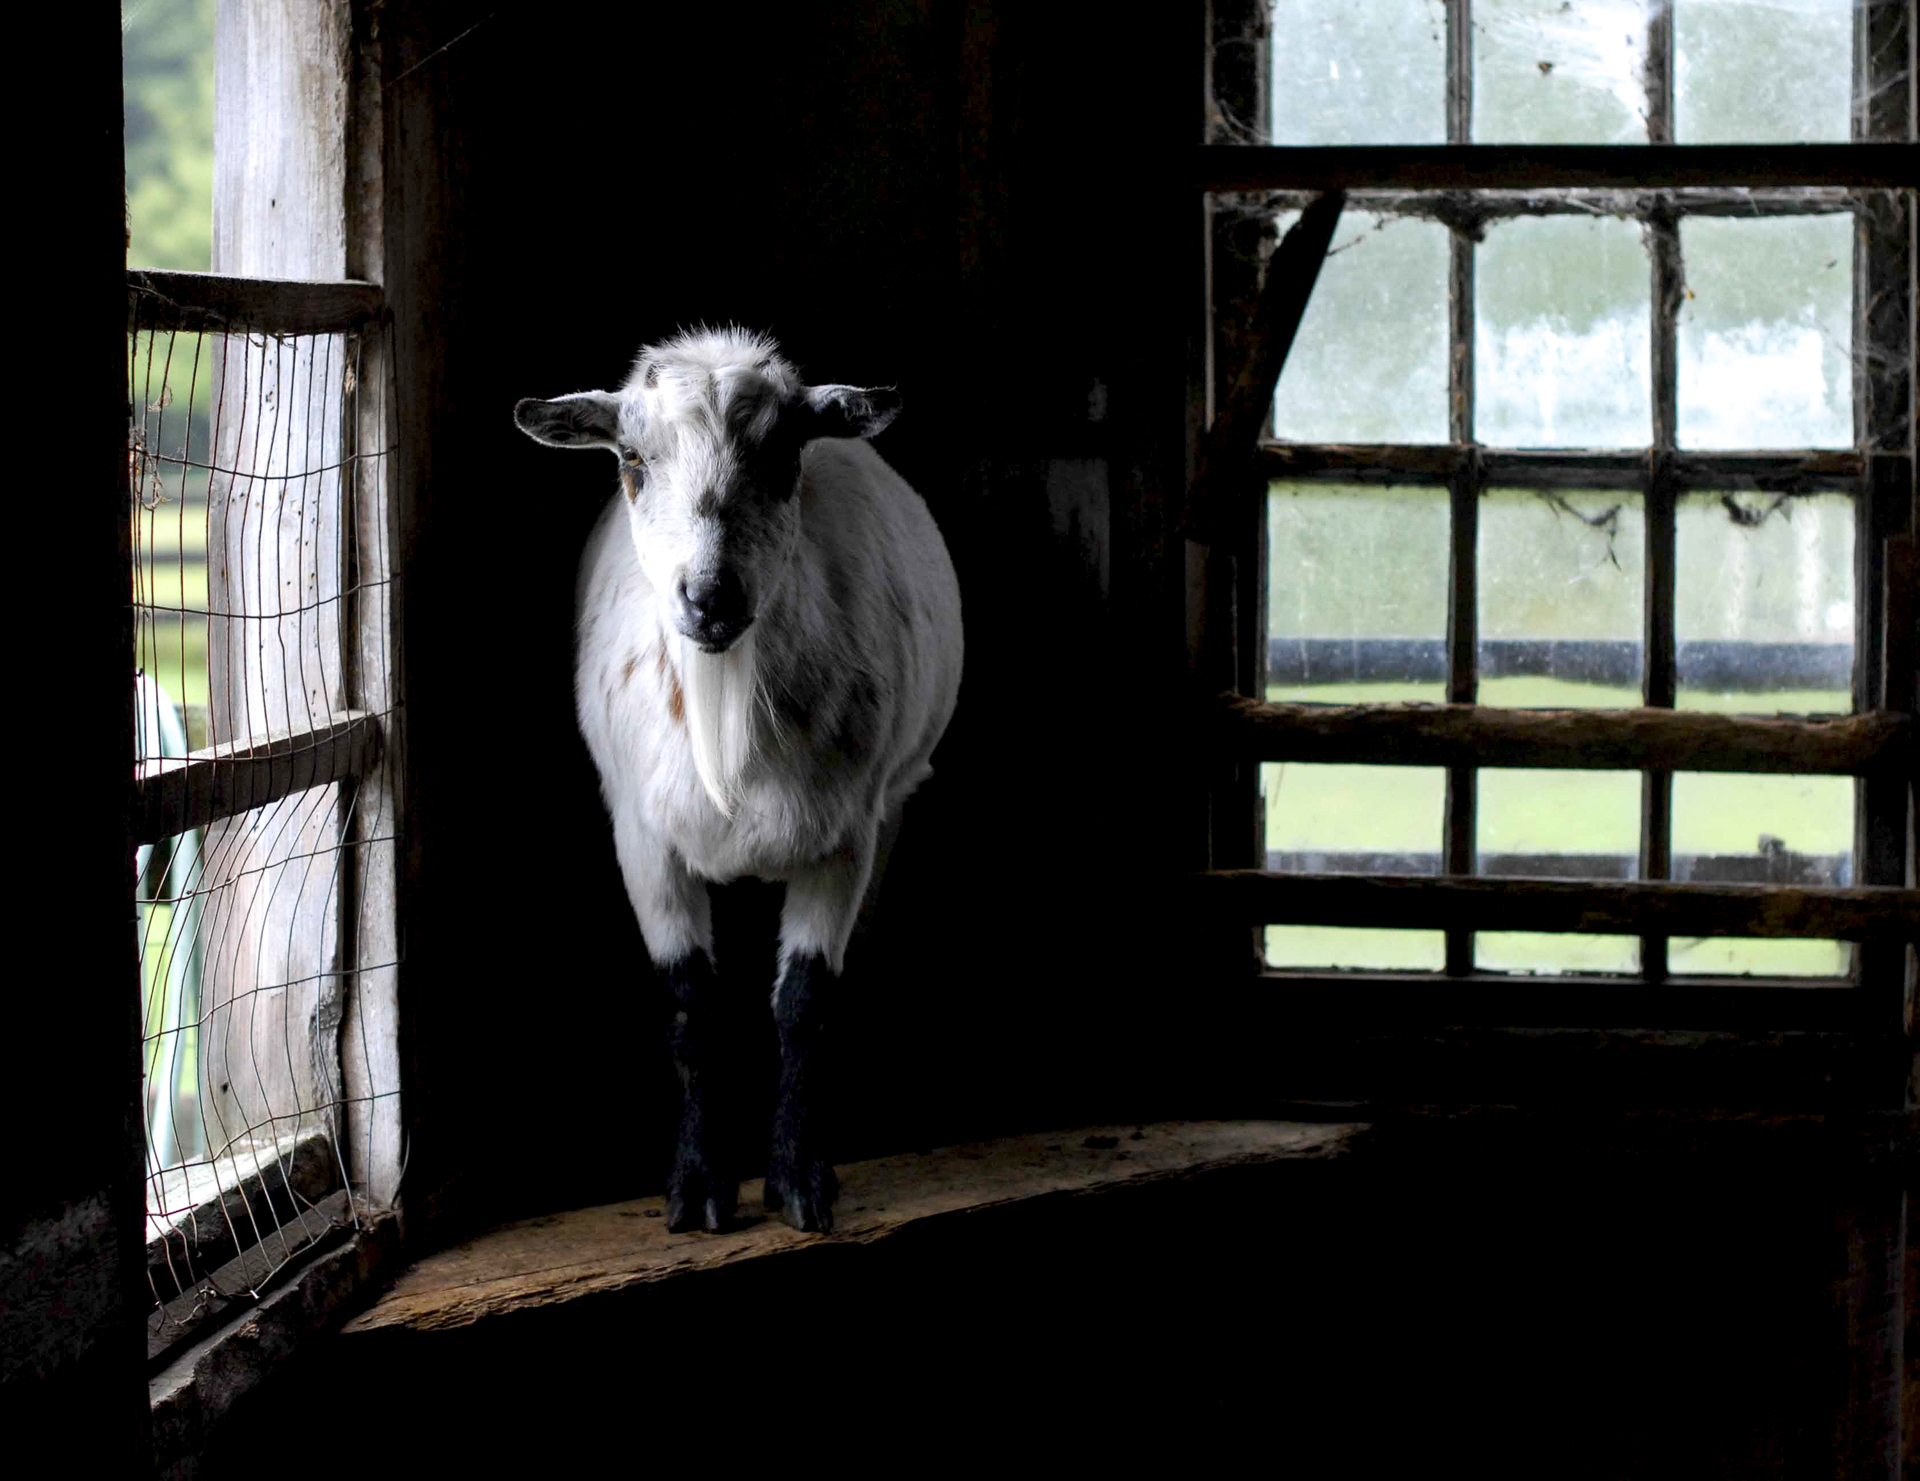 Goatie on the Edge by Nina Fuller